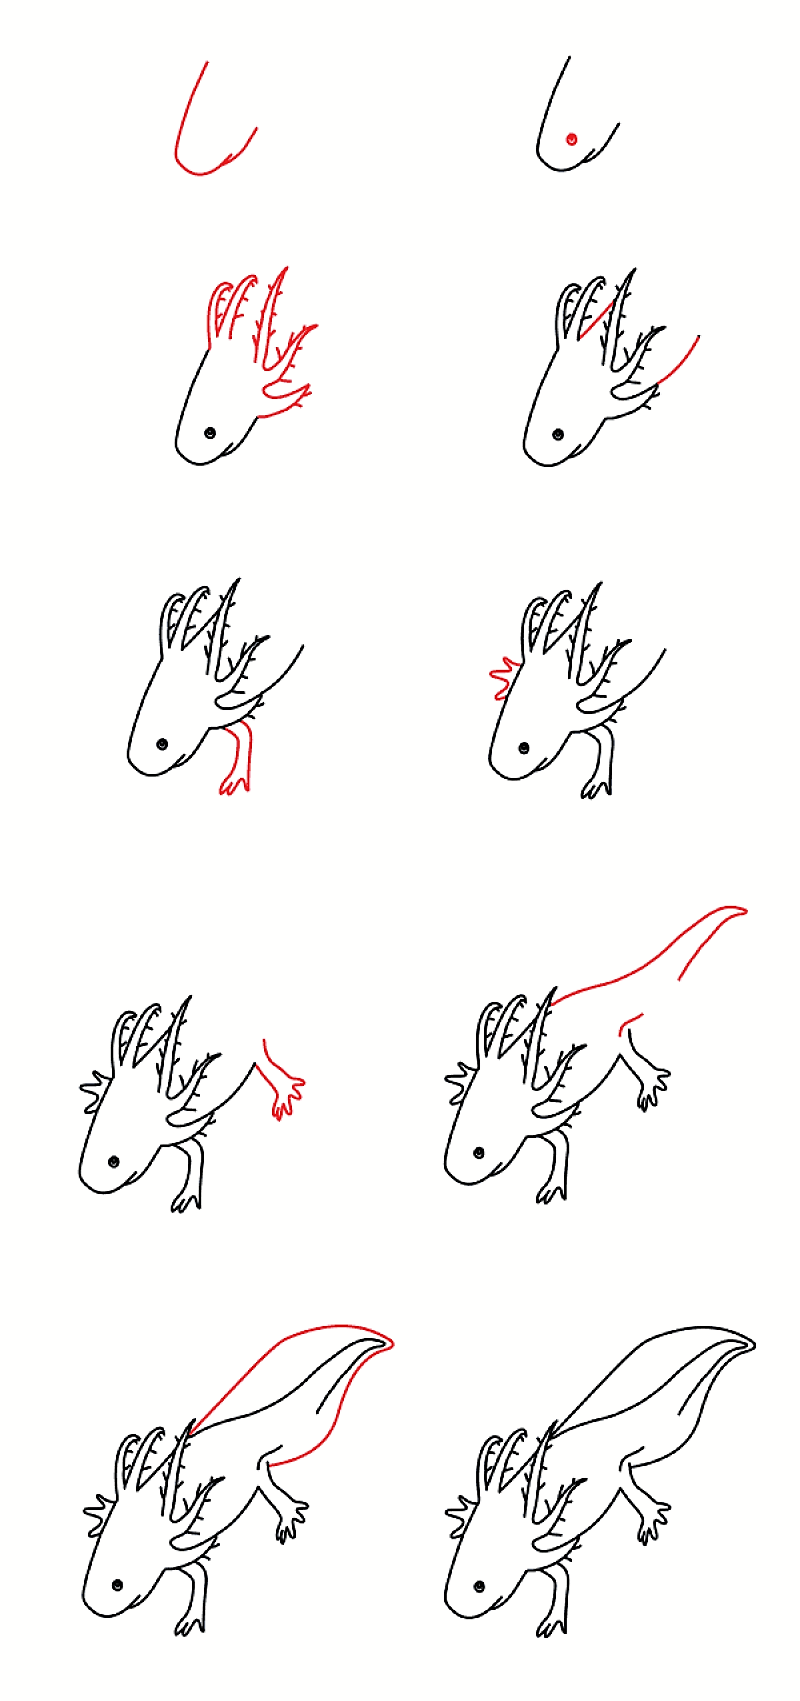 Basit bir Axolotl çizimi